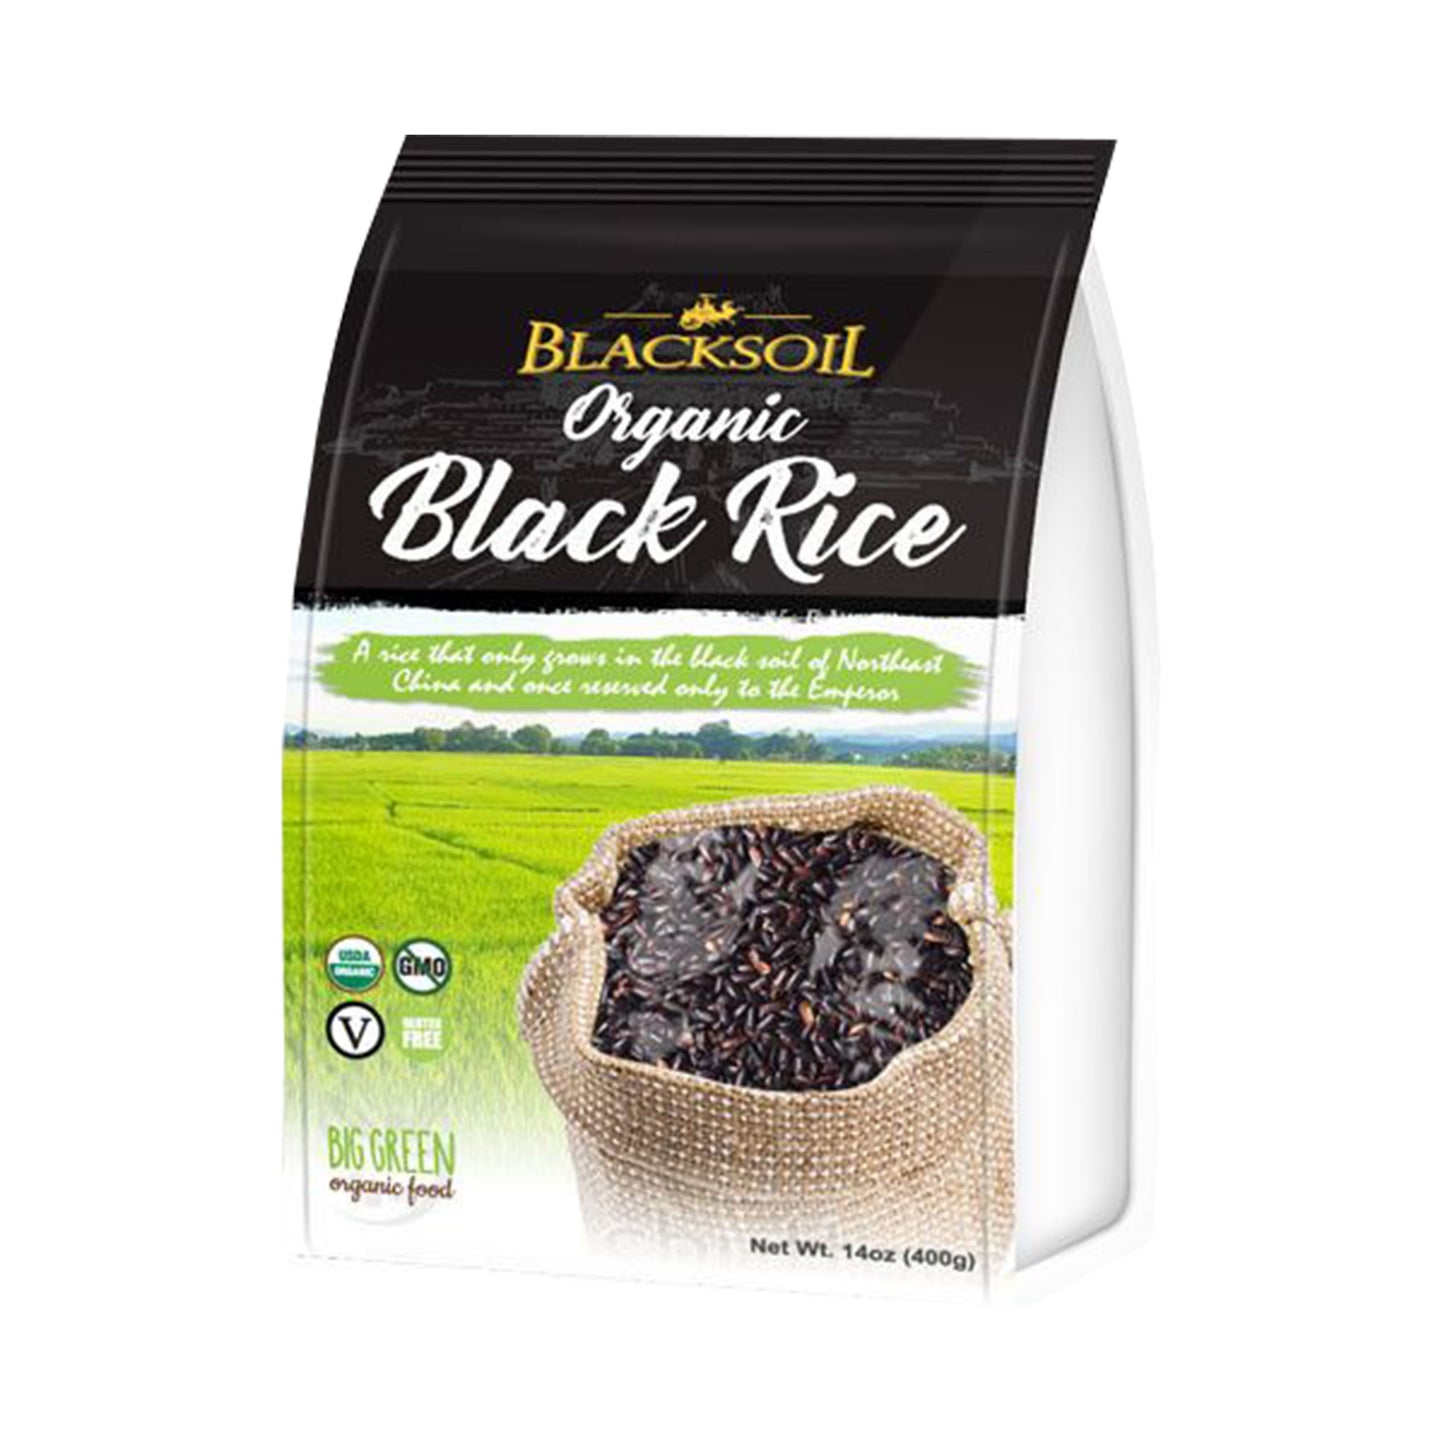 Big Green Organic Food Organic BlackSoil Black Rice 有機黑土黑米